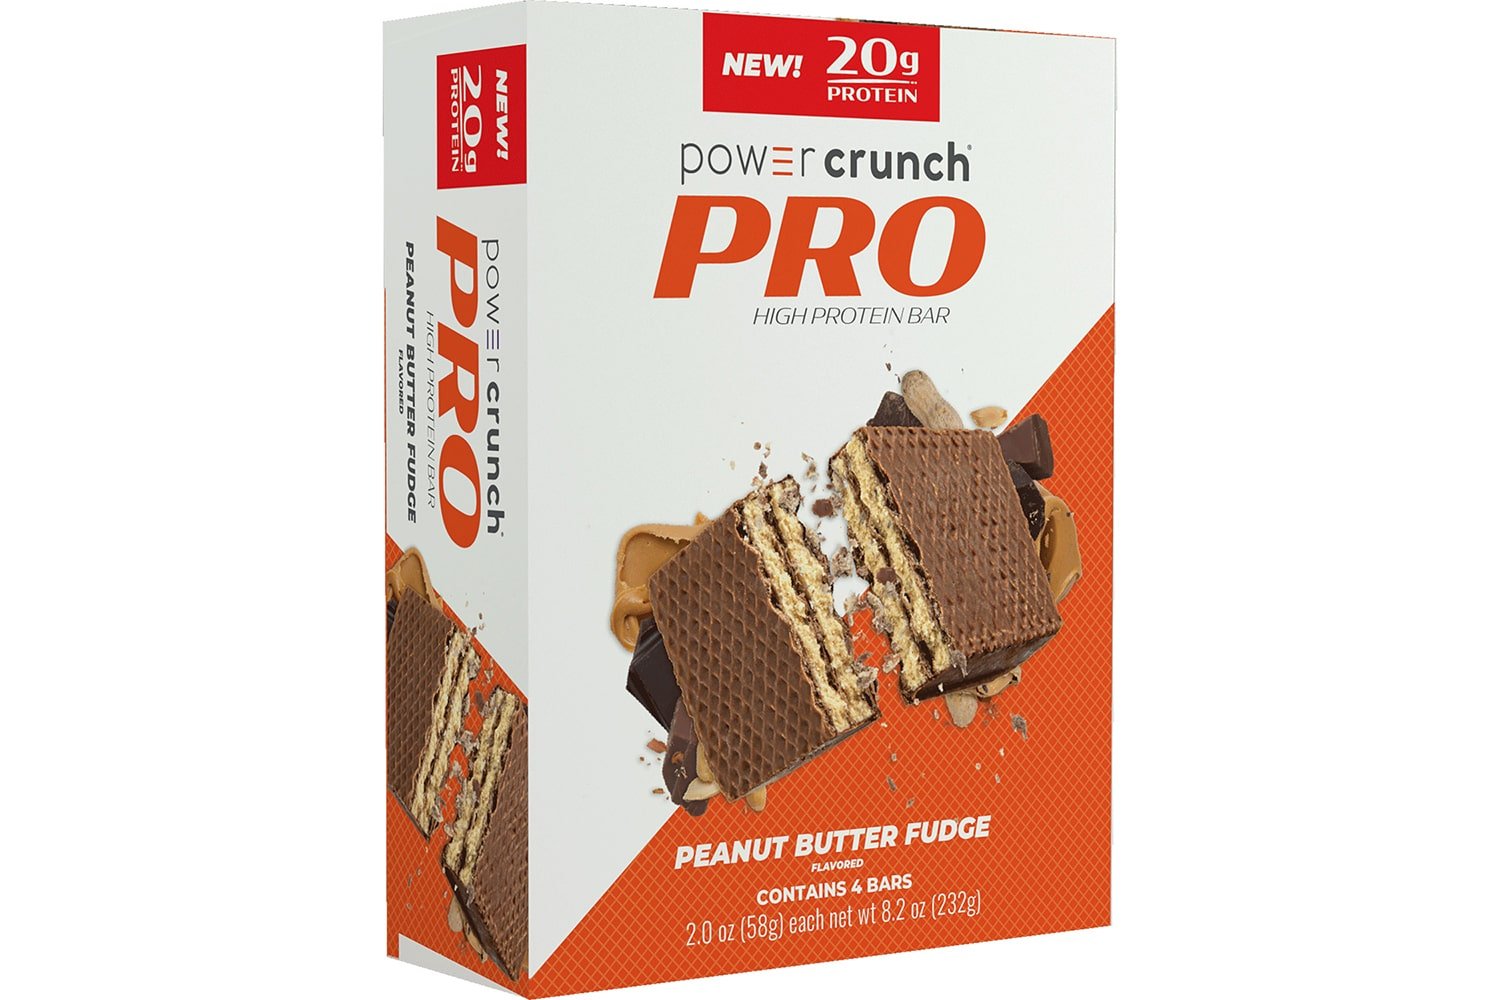 Box of Power Crunch Pro Peanut Butter Fudge 20g protein bars